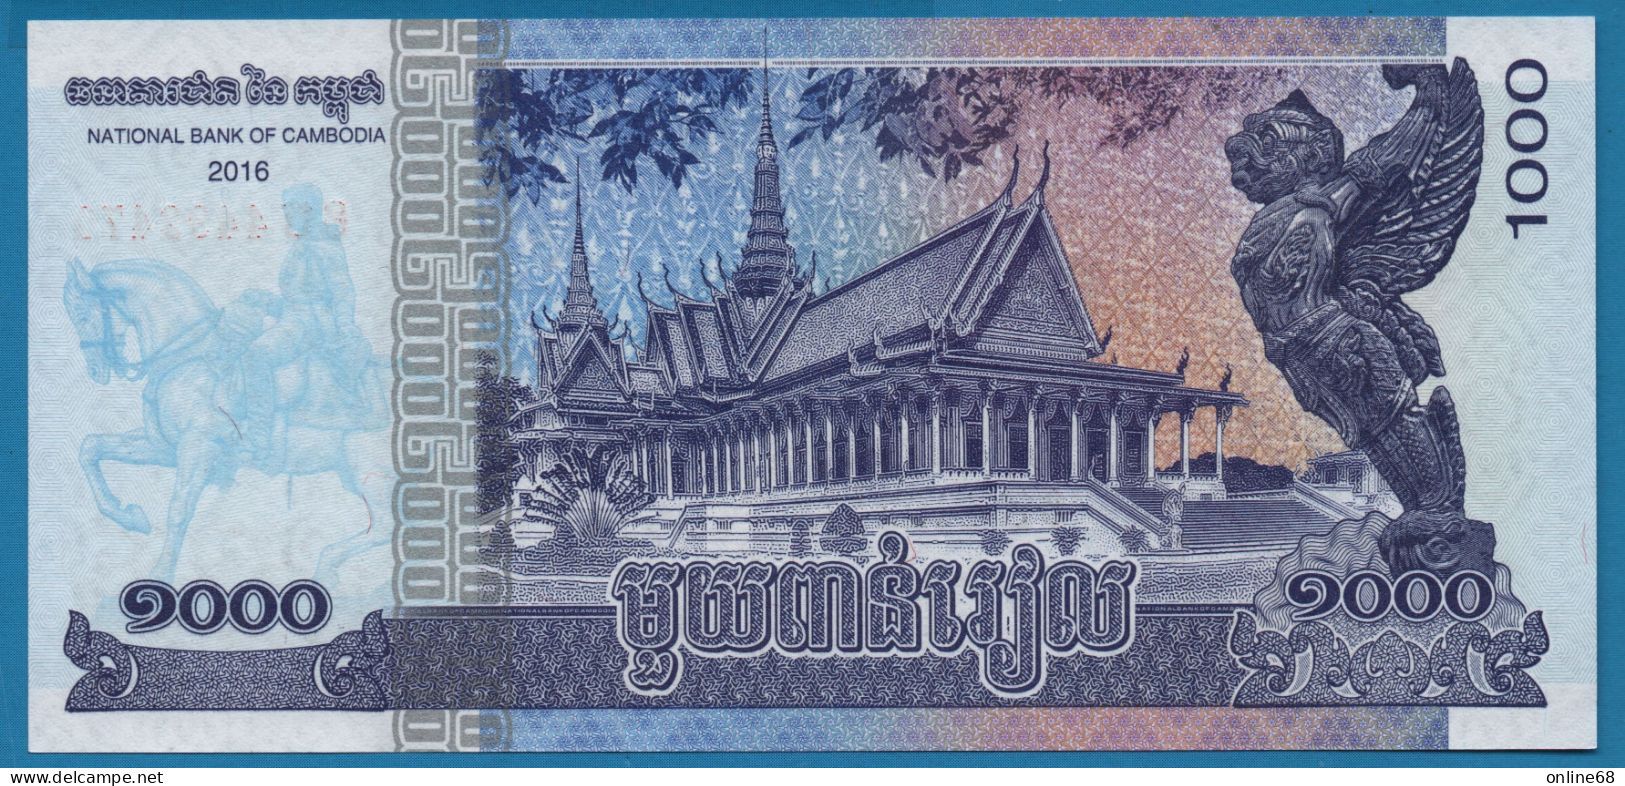 CAMBODIA 1000 RIELS 2016 # ខប 4492470 P# 67 King Norodom Sihanouk - Cambodge